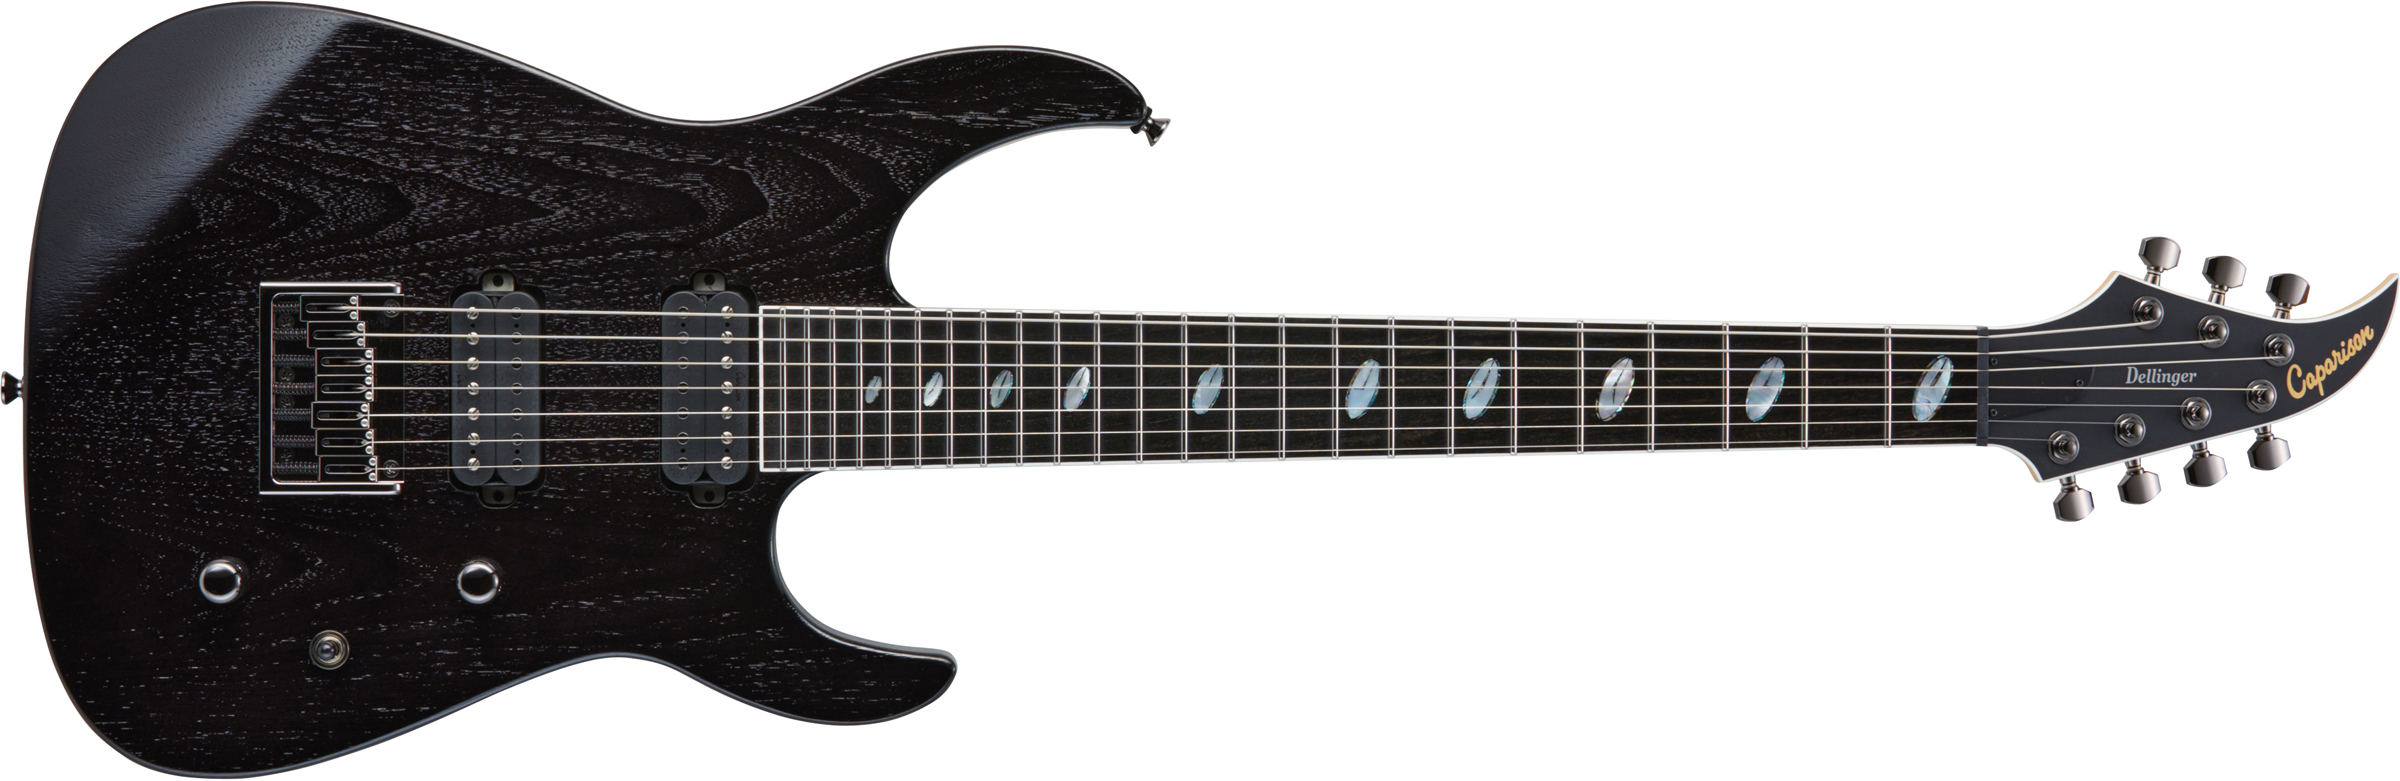 Caparison Guitars Dellinger7-WB-FX EF/MF